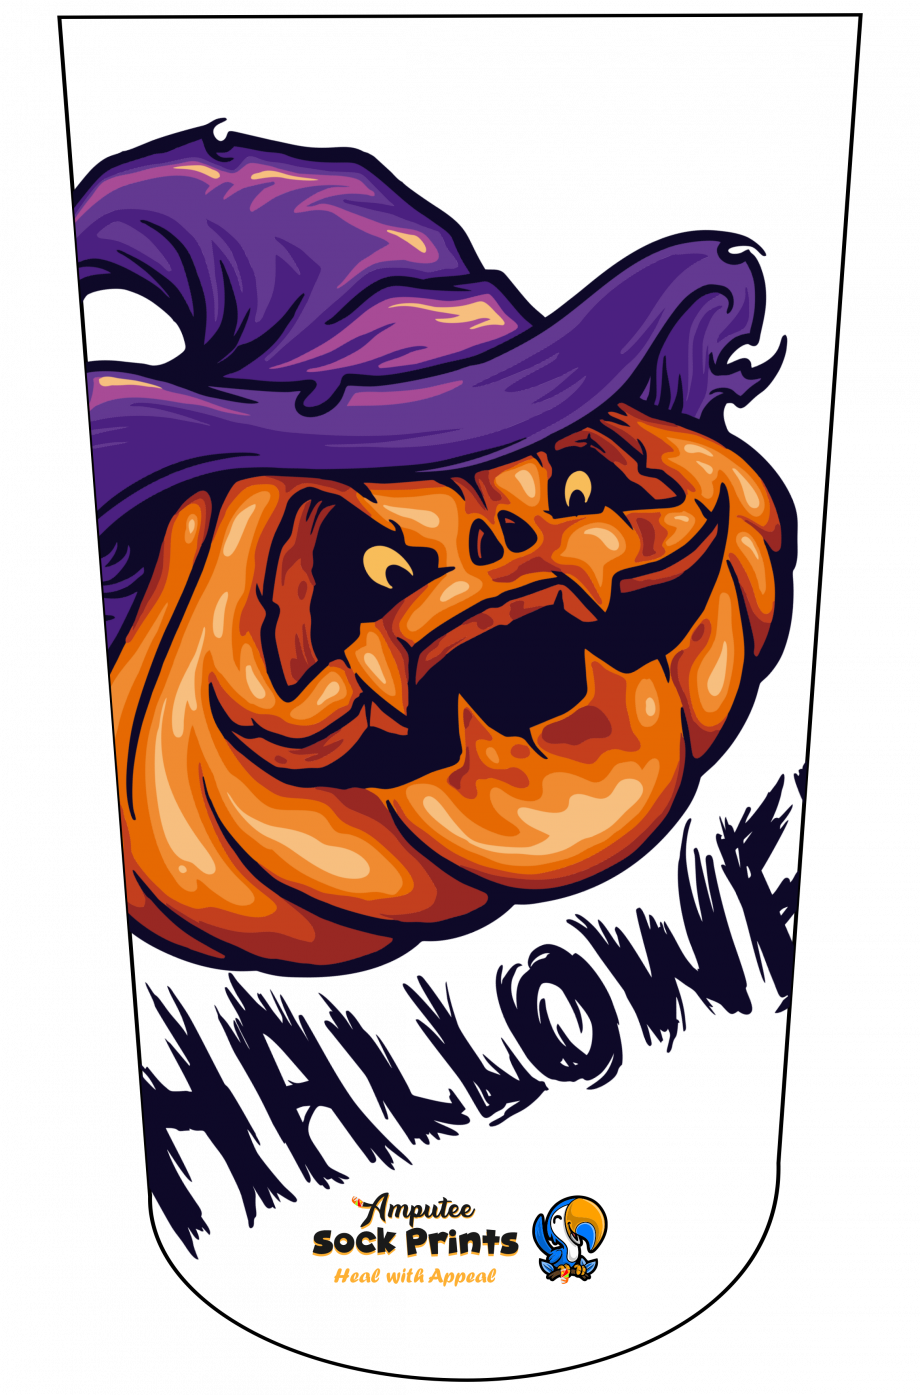 Scary Pumpkin Wizard V1